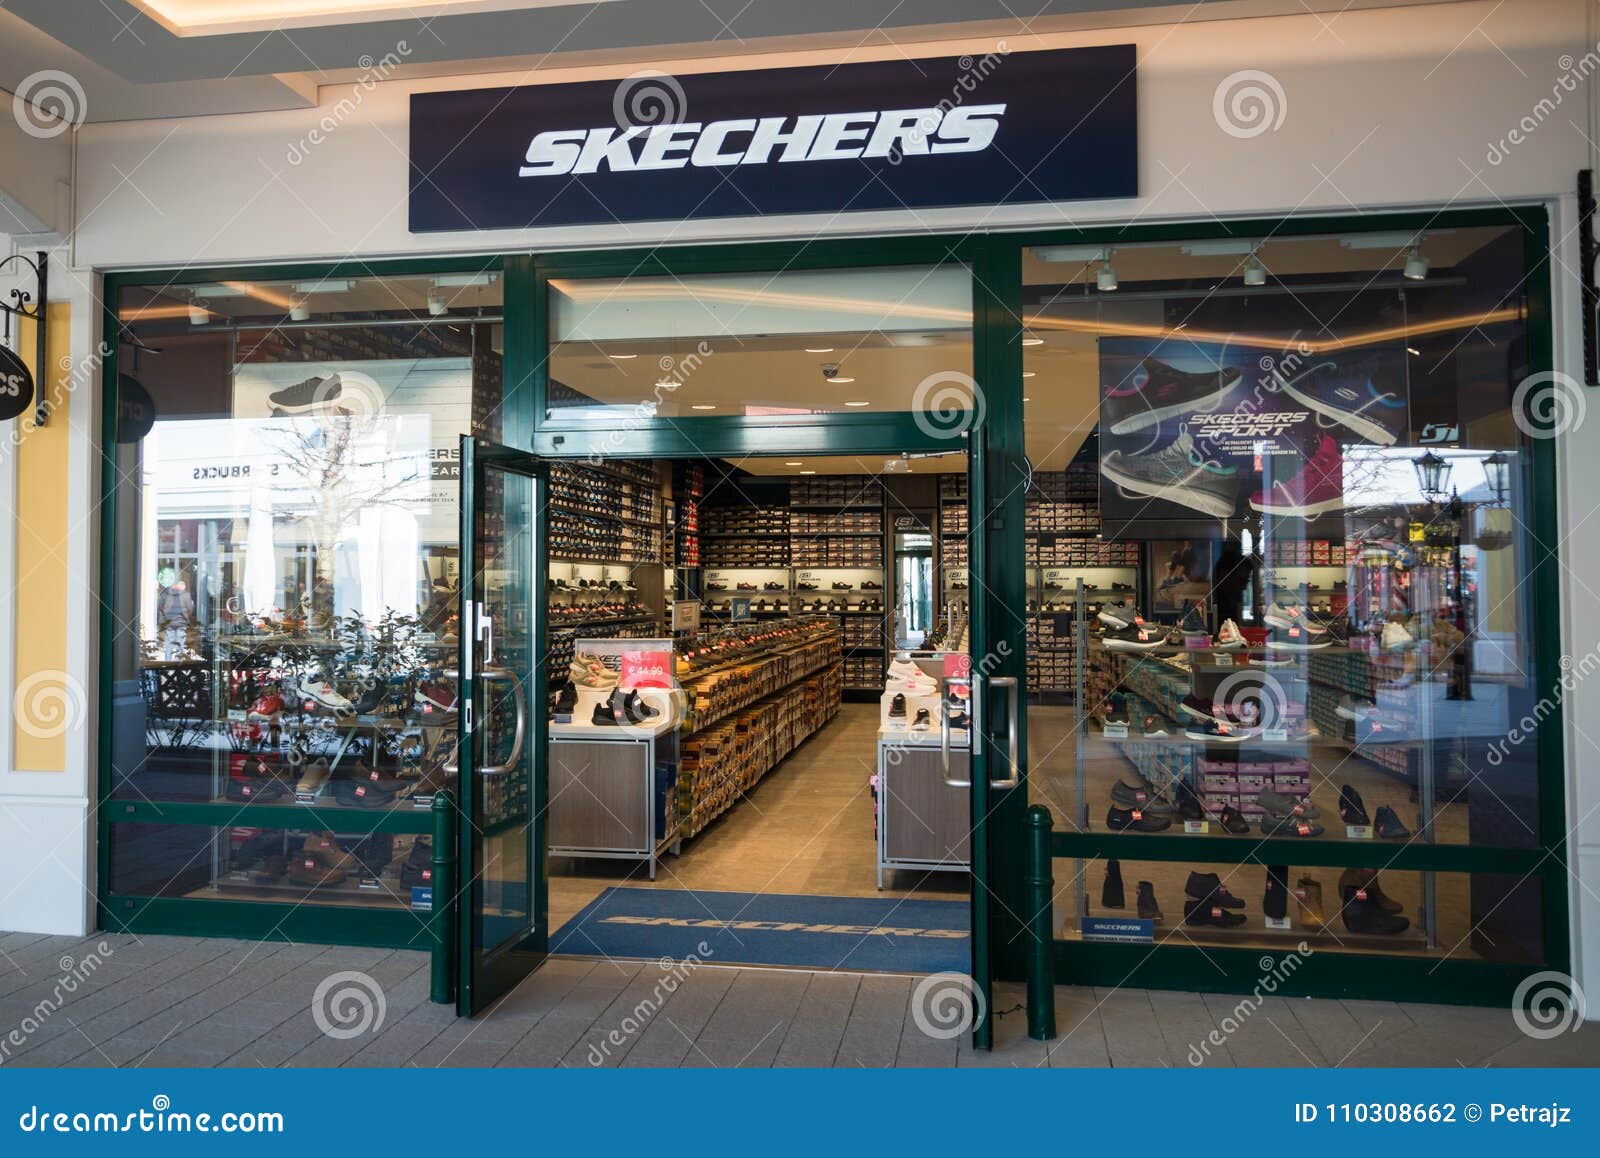 Skechers Store In Parndorf, Austria 